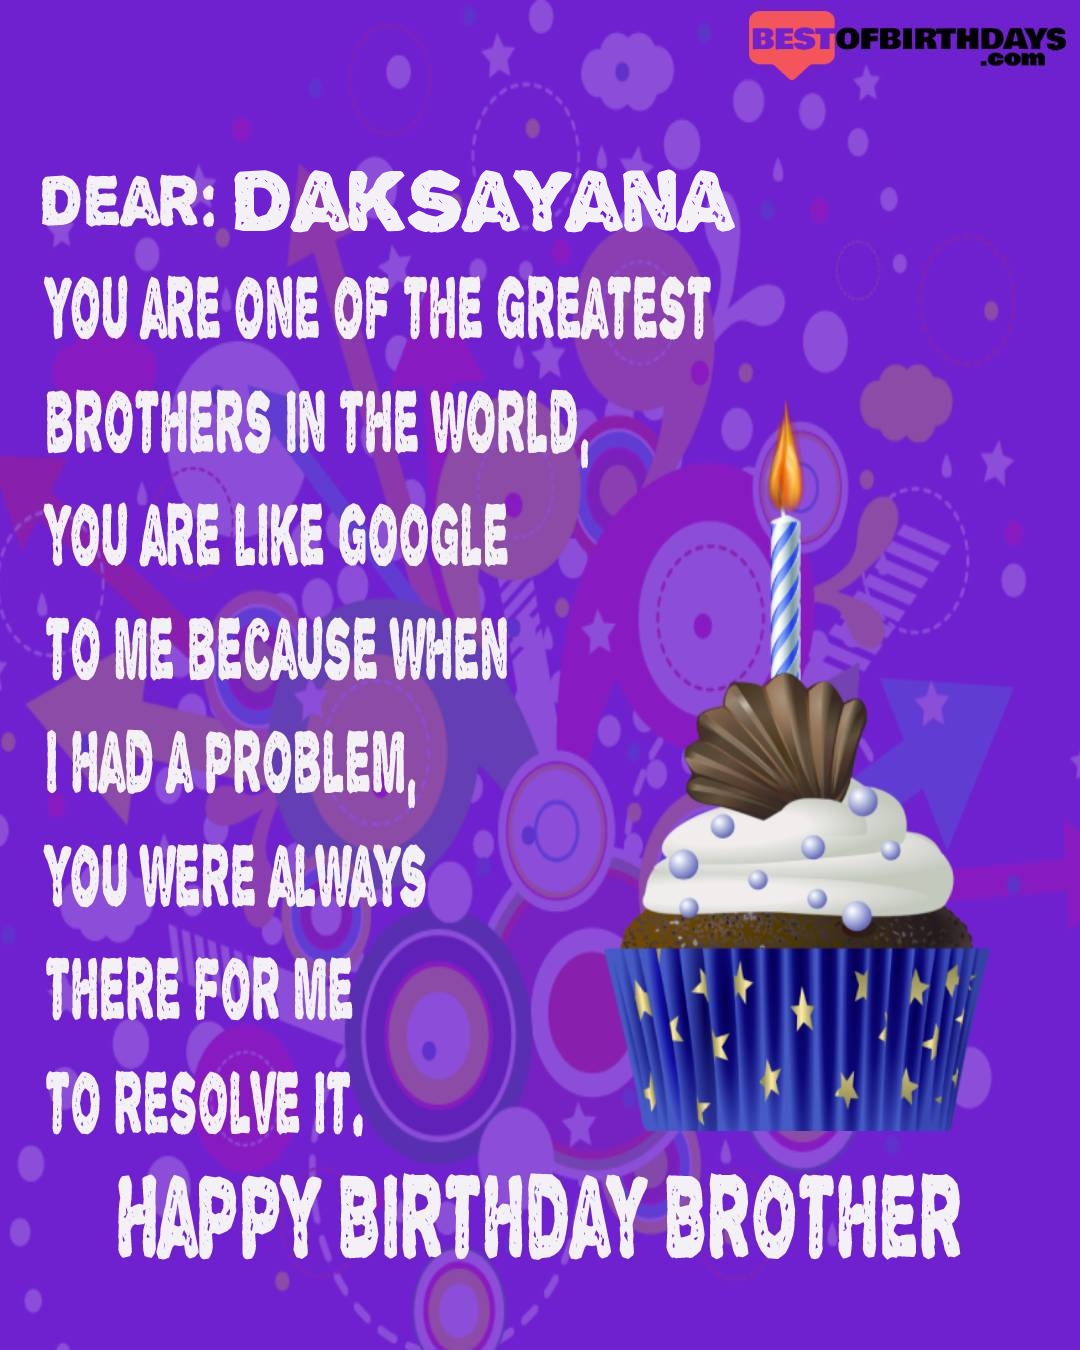 Happy birthday daksayana bhai brother bro